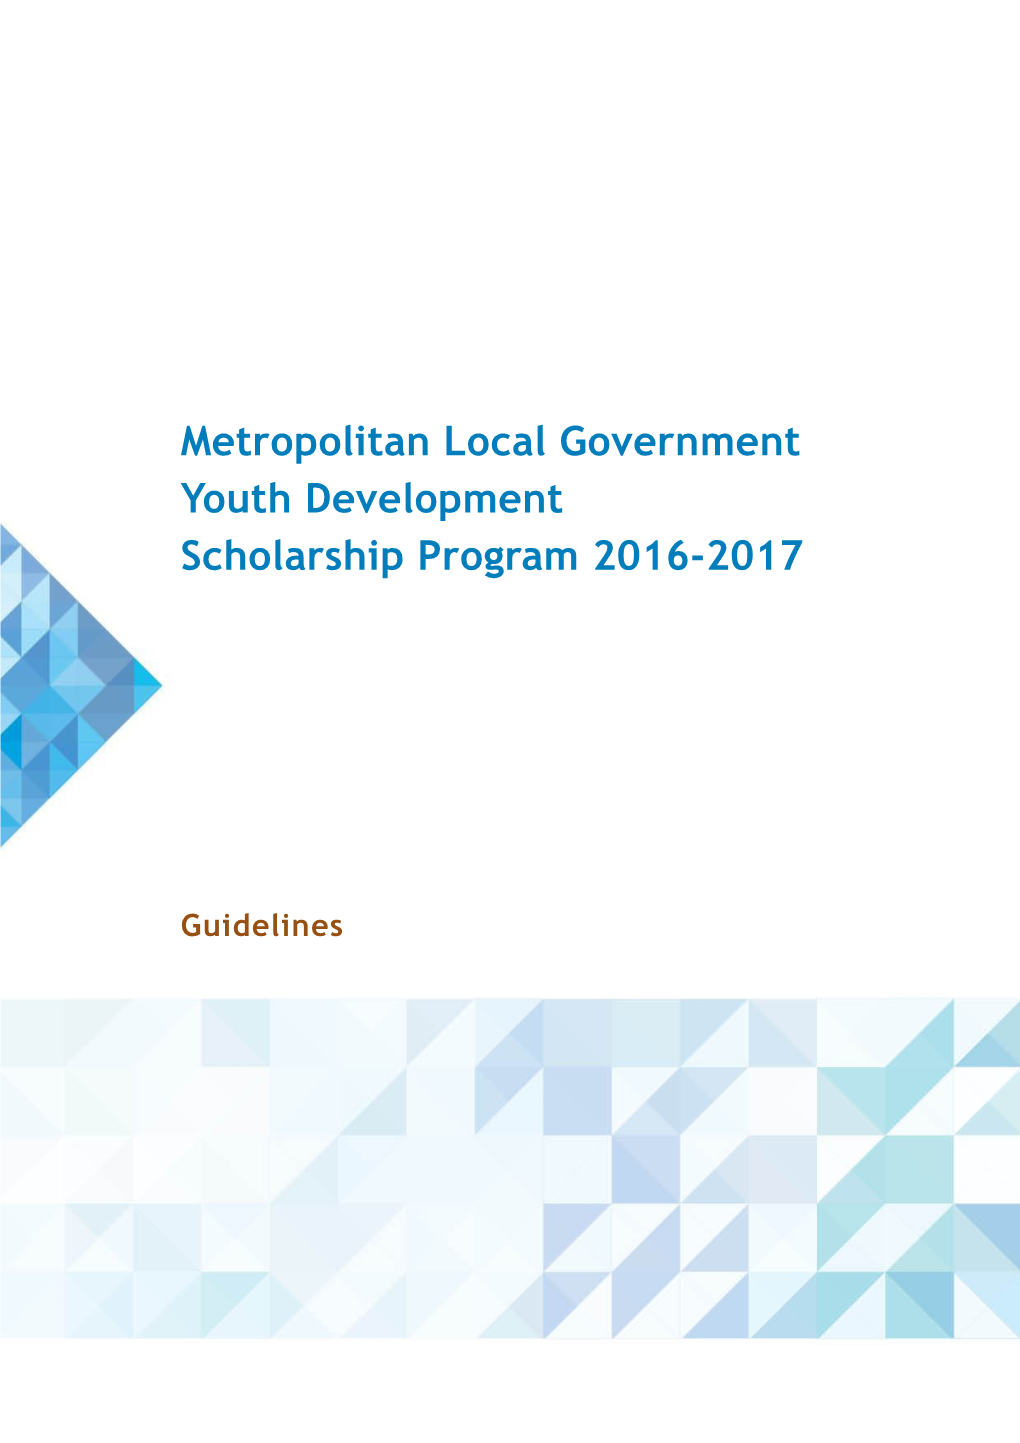 Metropolitan Local Government Youth Development Scholarship Program 2016-2017 Guidelines